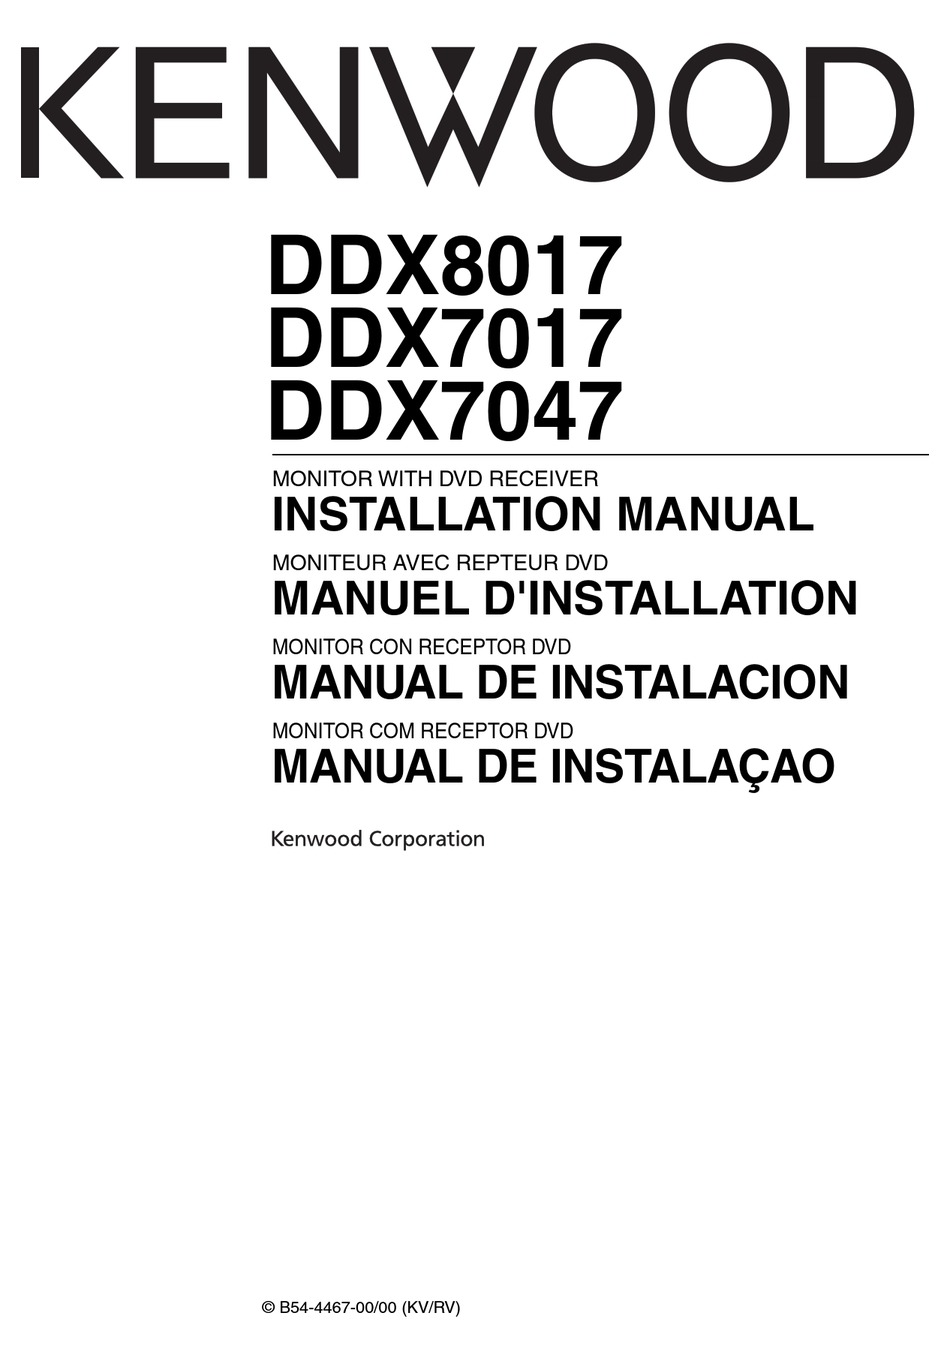 Kenwood Ddx7017 Installation Manual Pdf